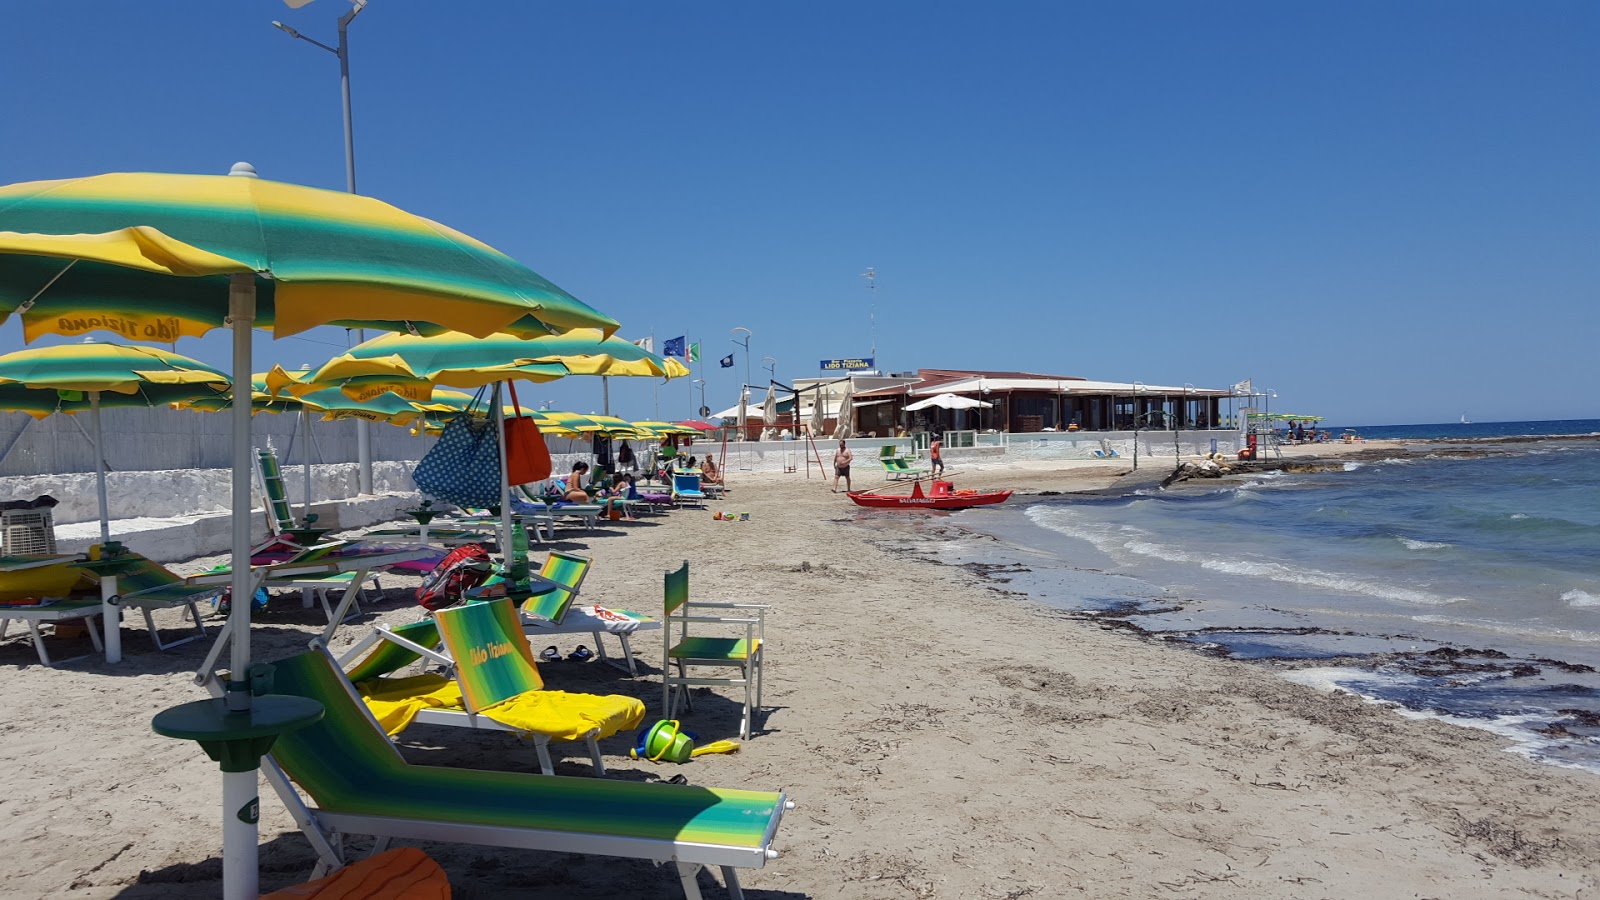 Spiaggia di Specchiolla'in fotoğrafı parlak kum yüzey ile